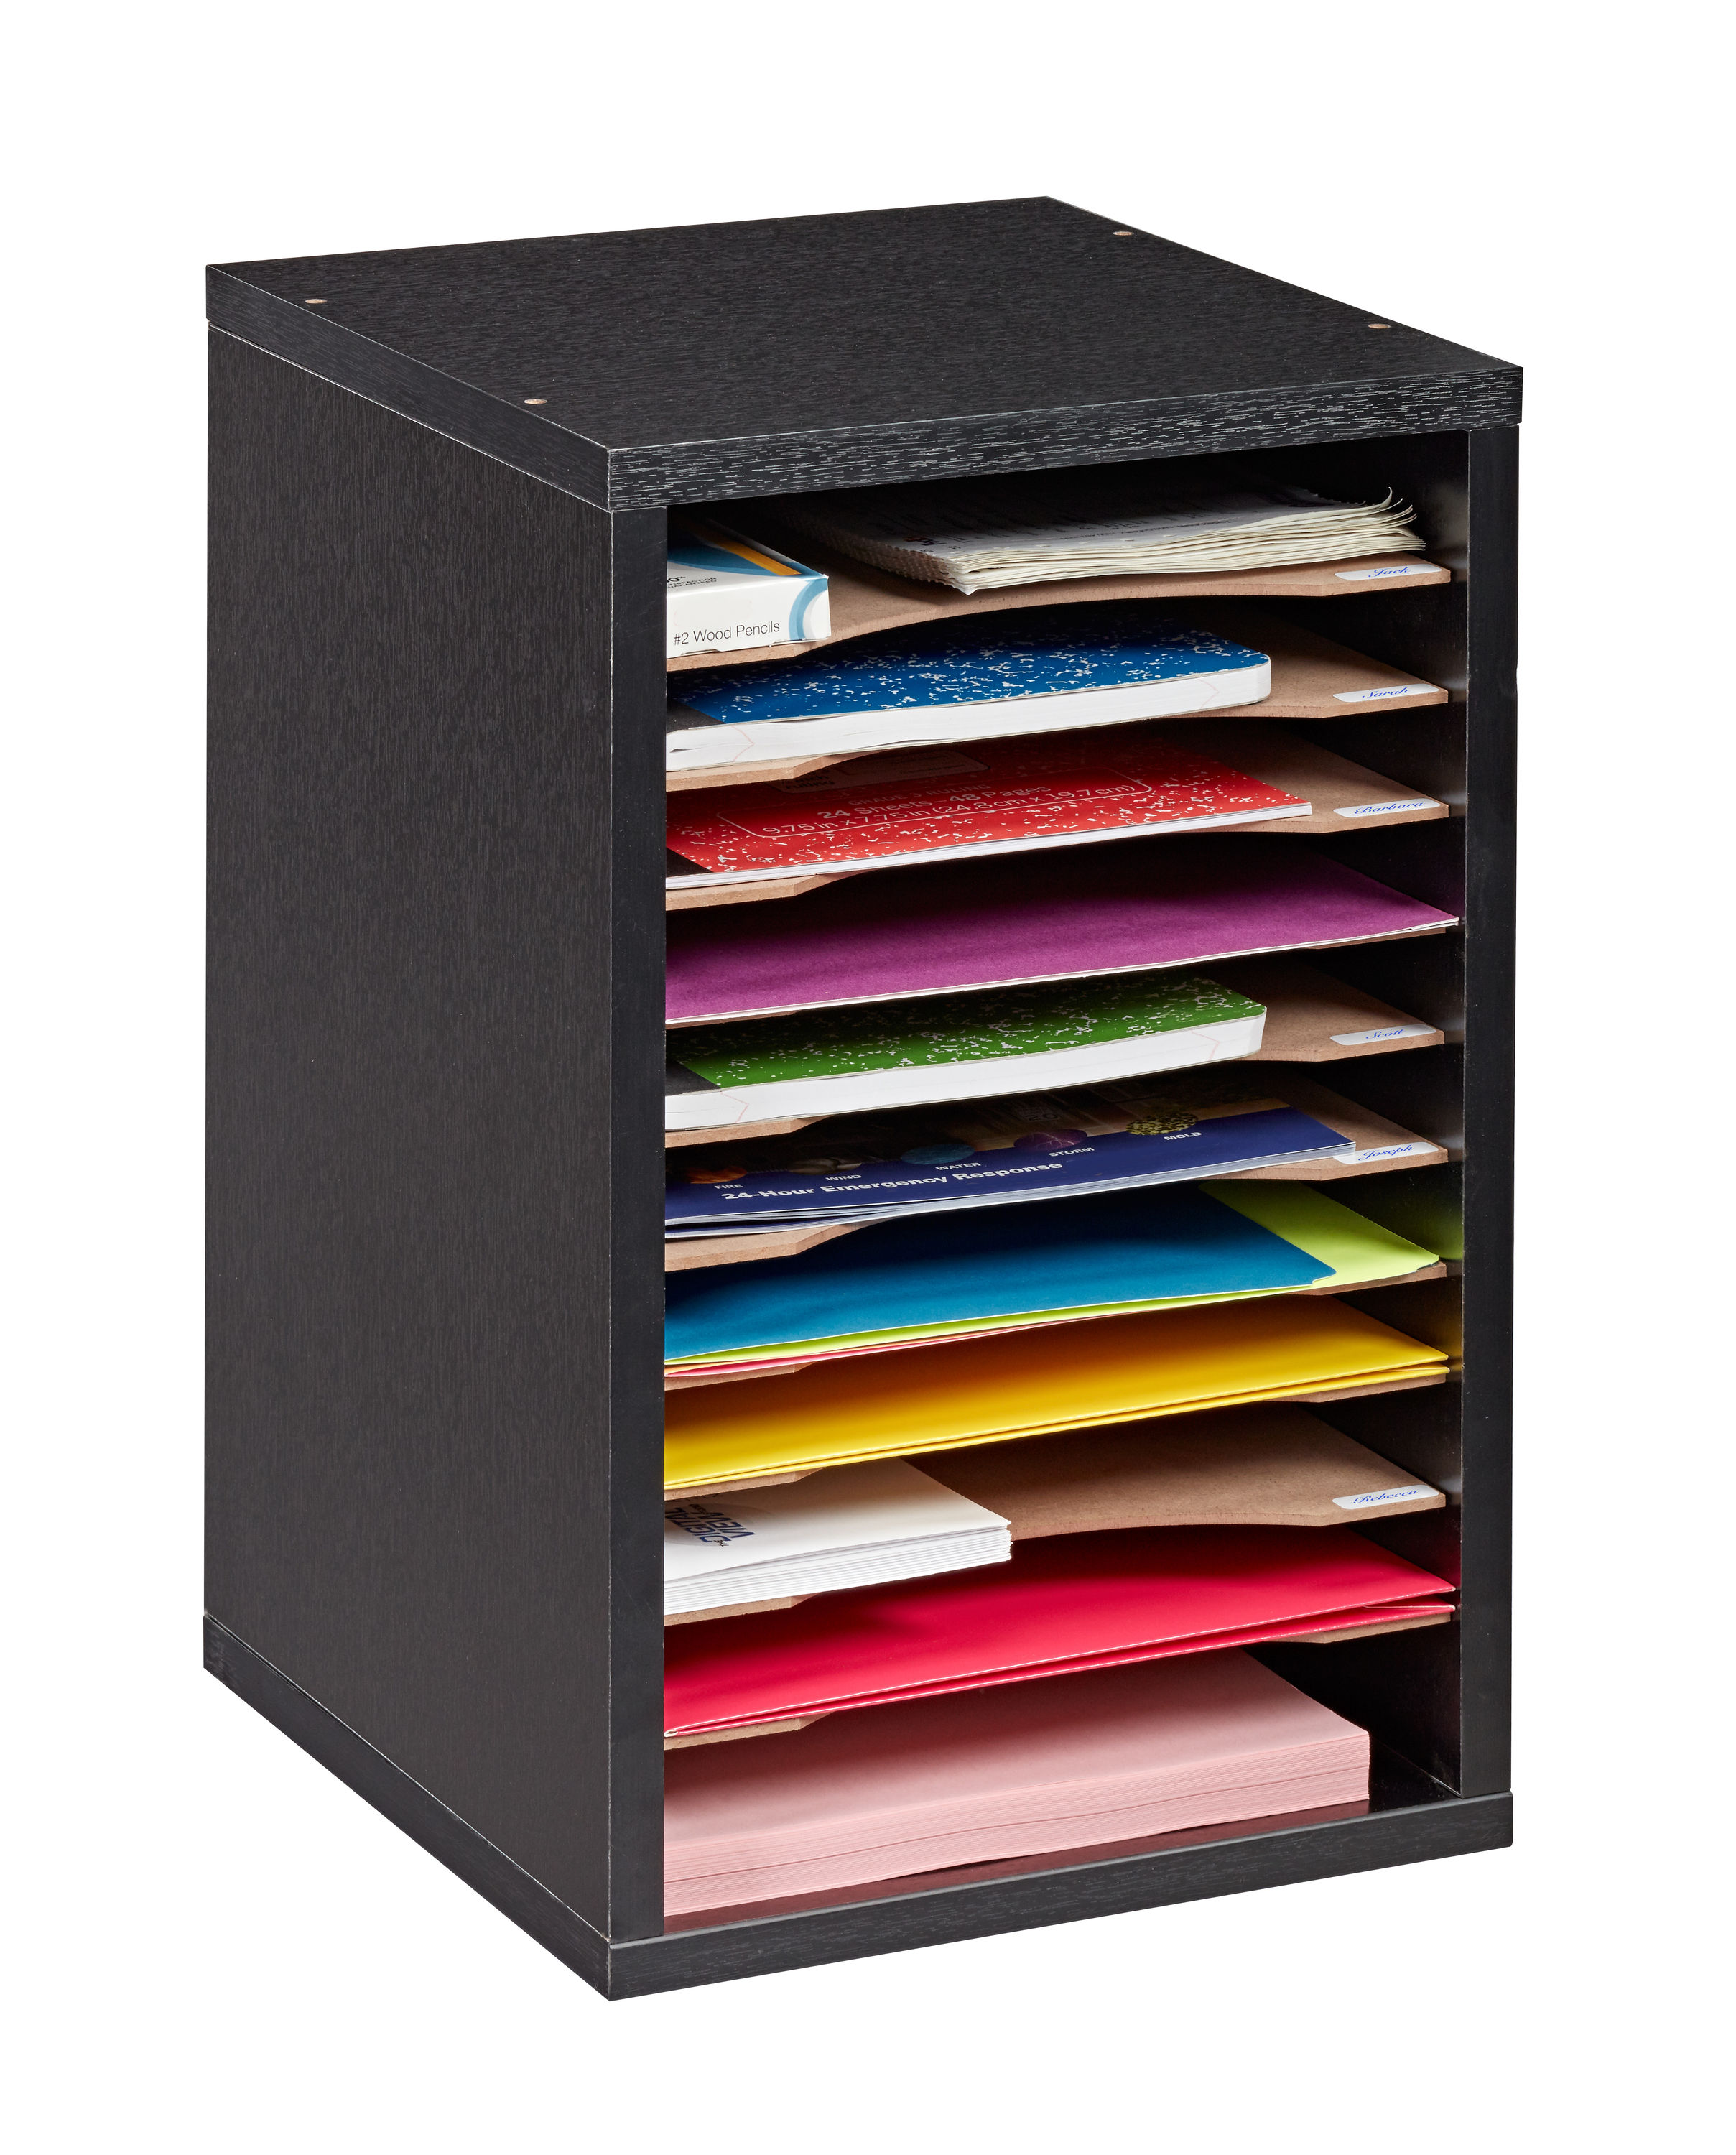 AdirOffice Wood 11 Compartment Vertical Paper Desktop Sorter Organizer - Black